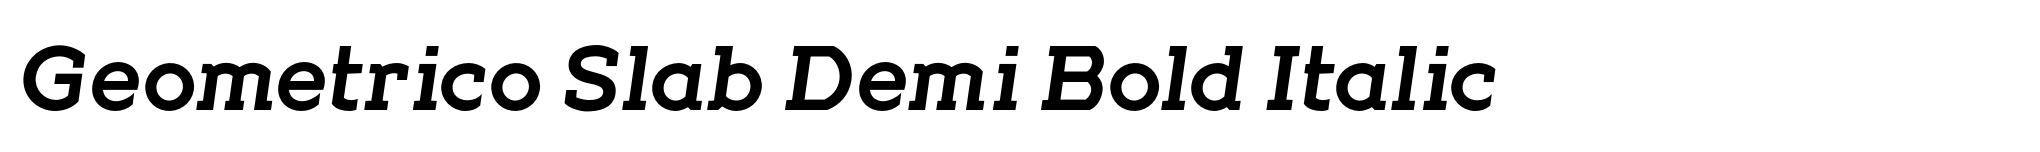 Geometrico Slab Demi Bold Italic image